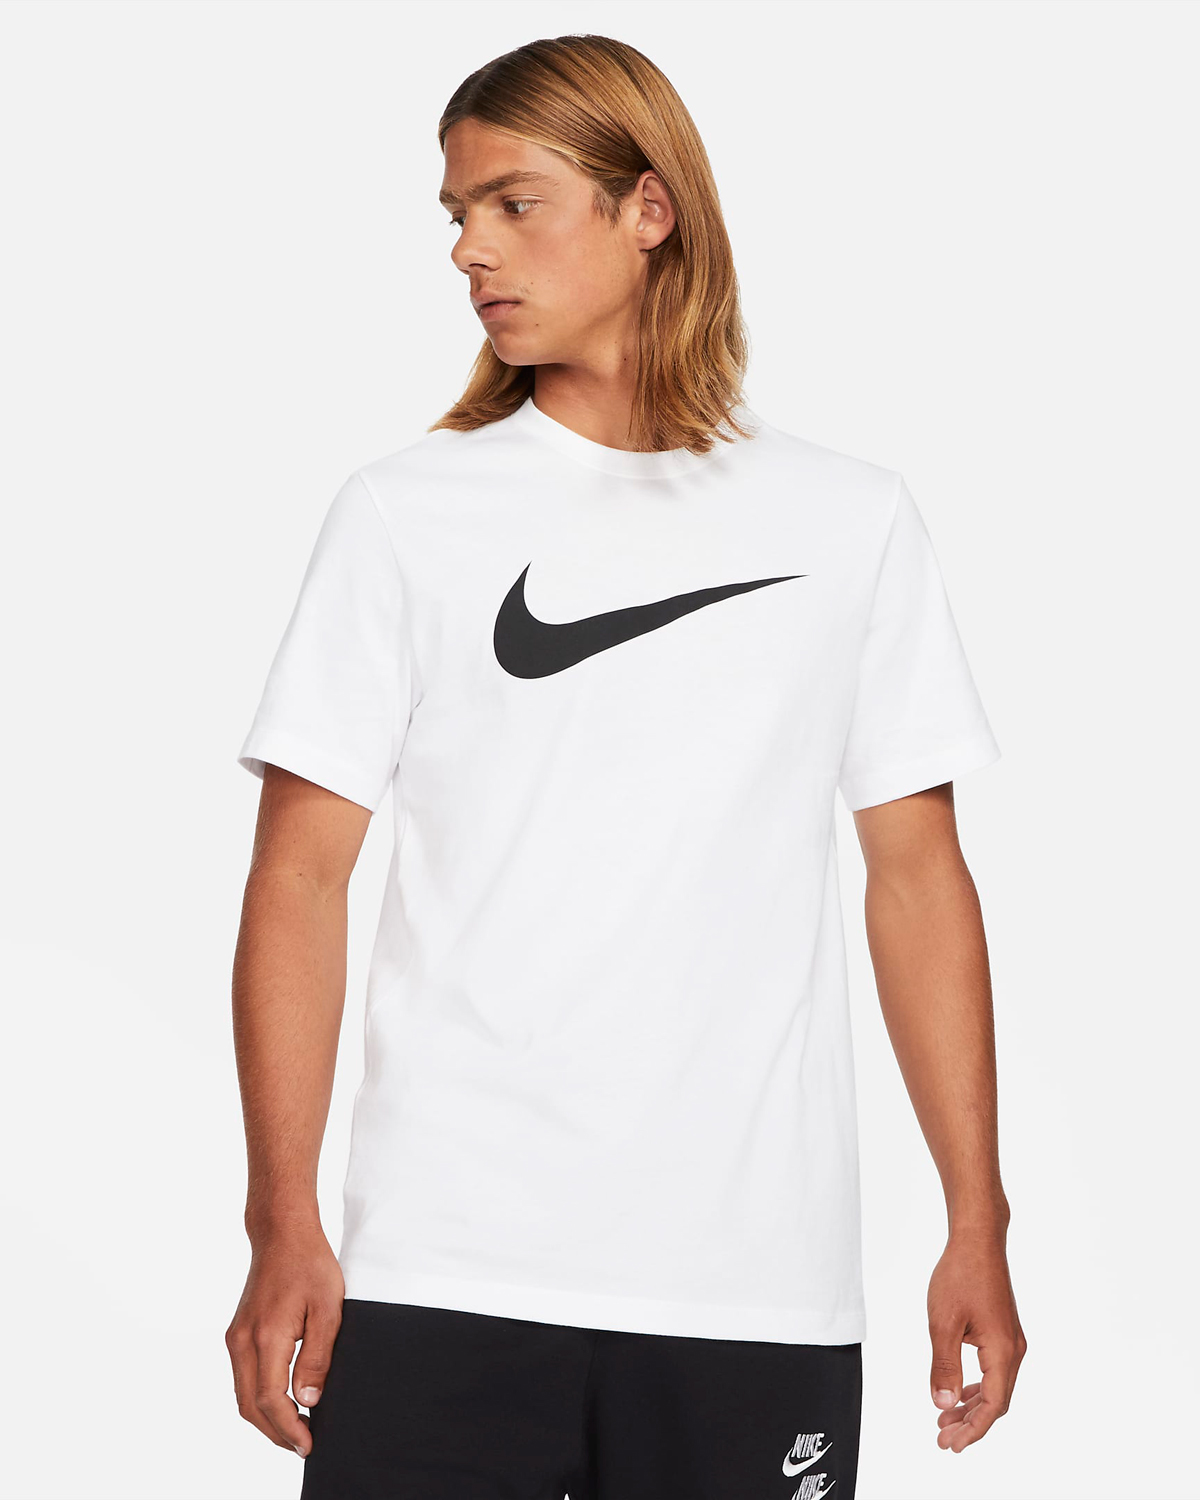 Nike-Sportswear-Swoosh-T-Shirt-White-Black